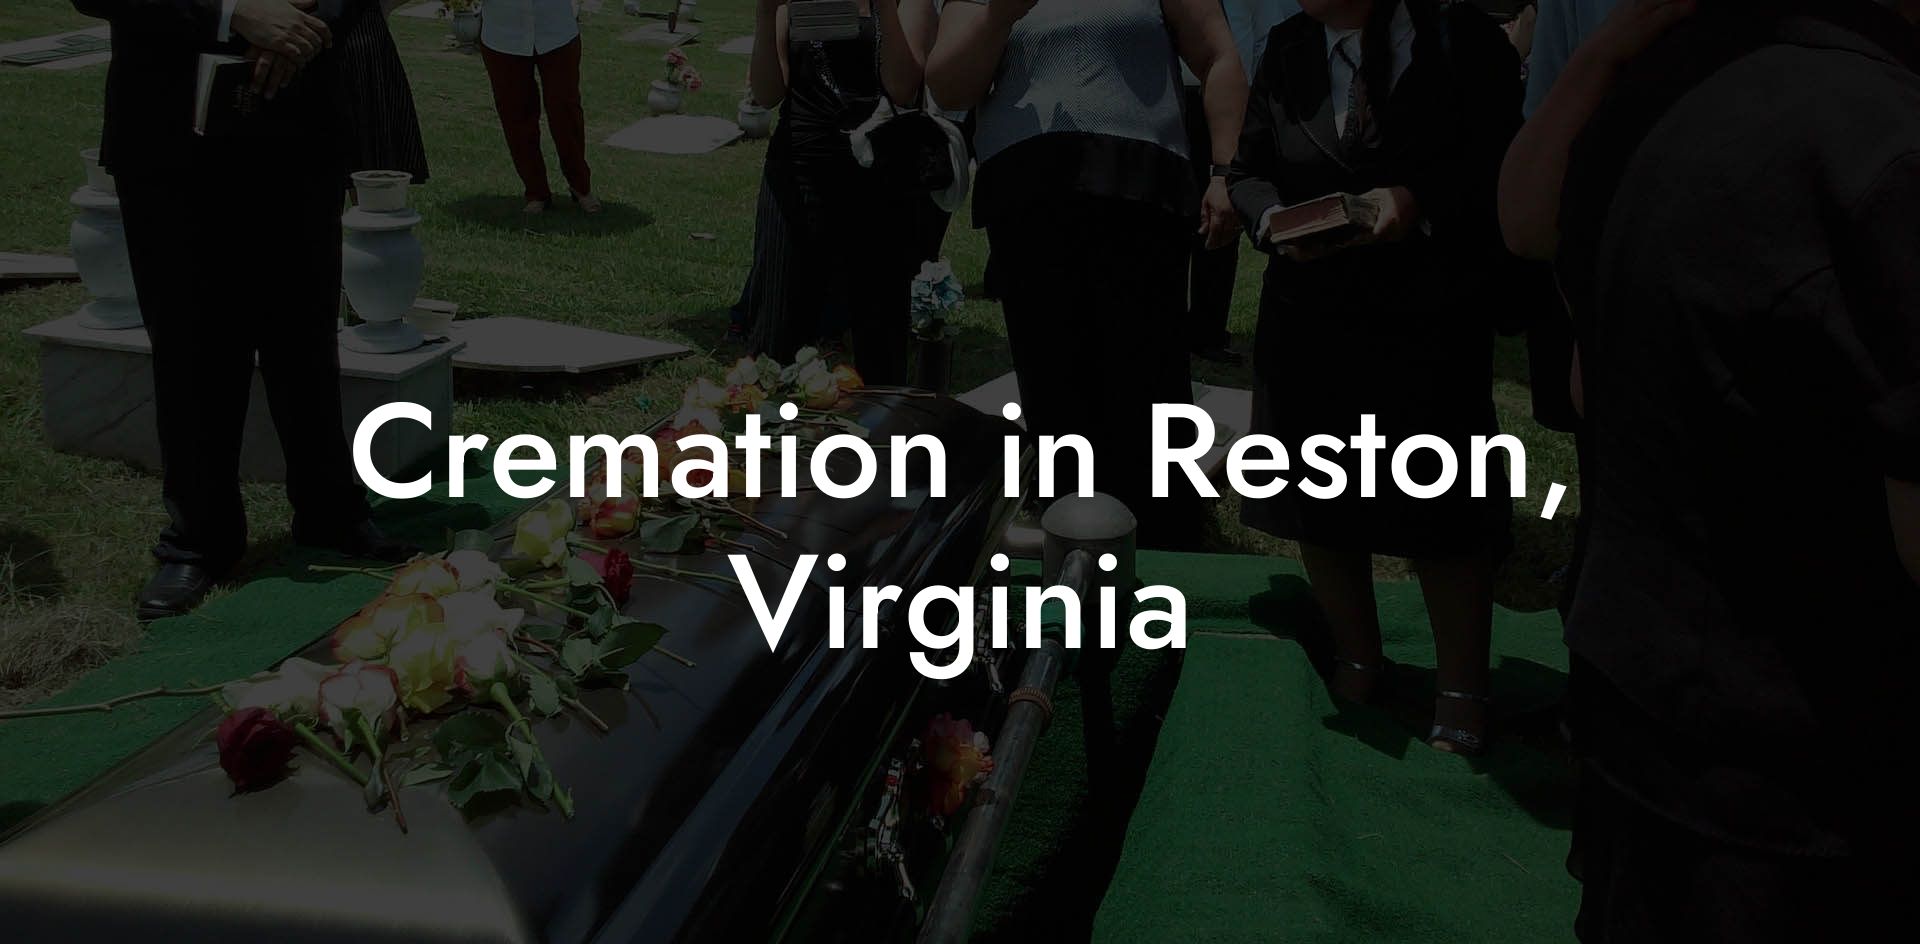 Cremation in Reston, Virginia